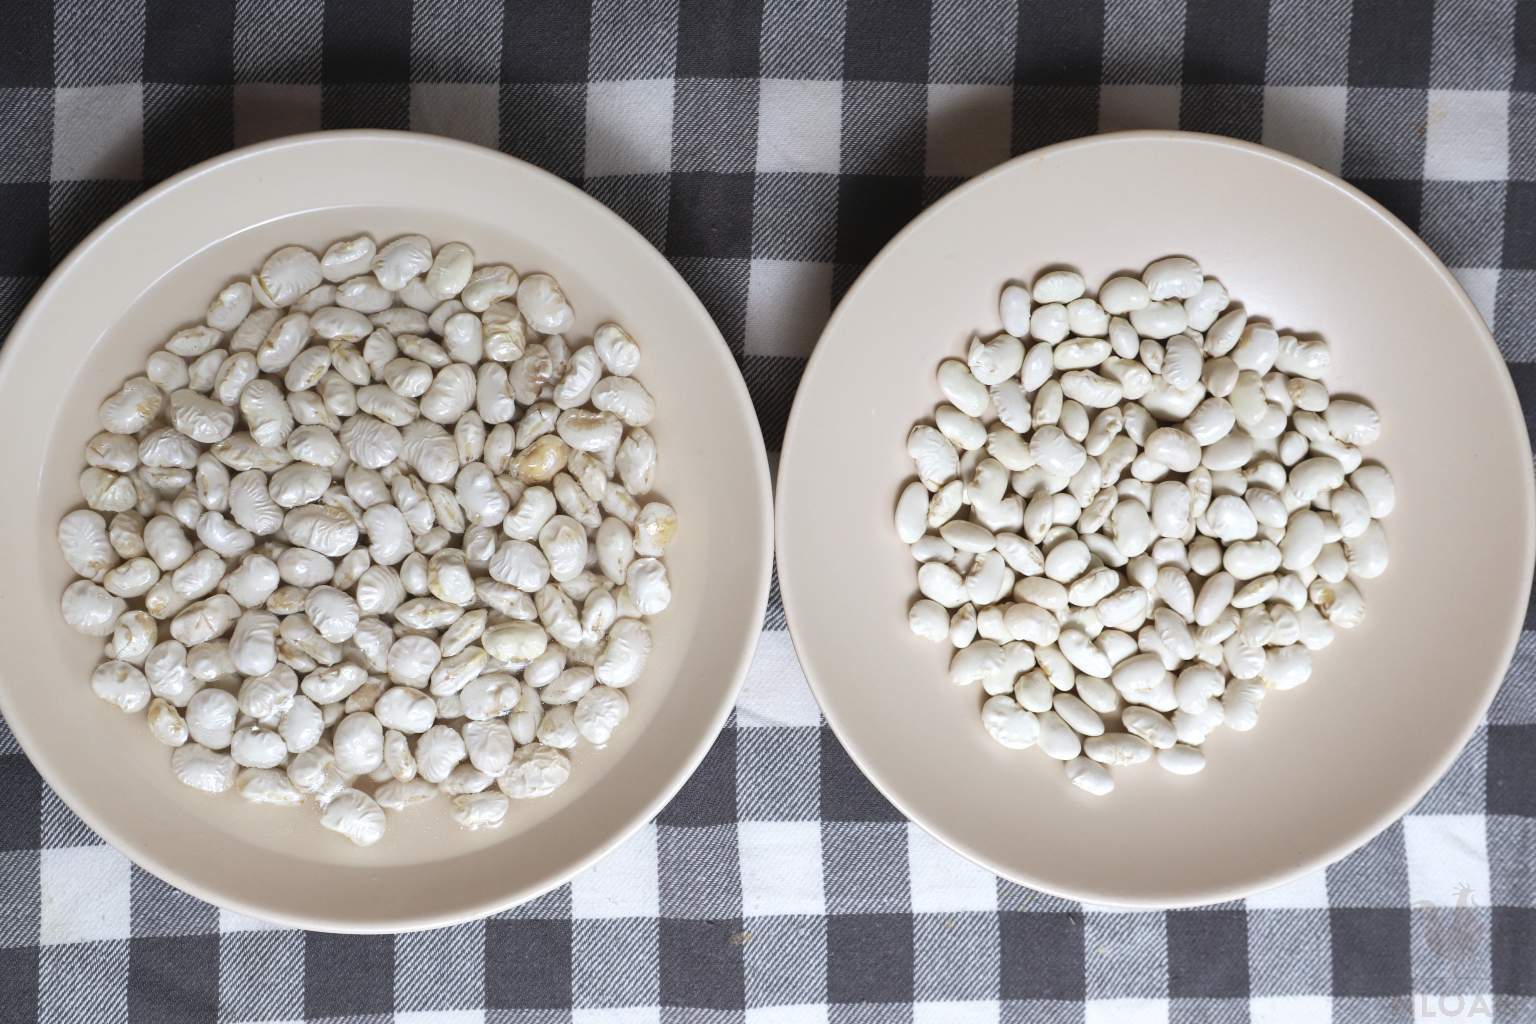 soft beans next to hard beans